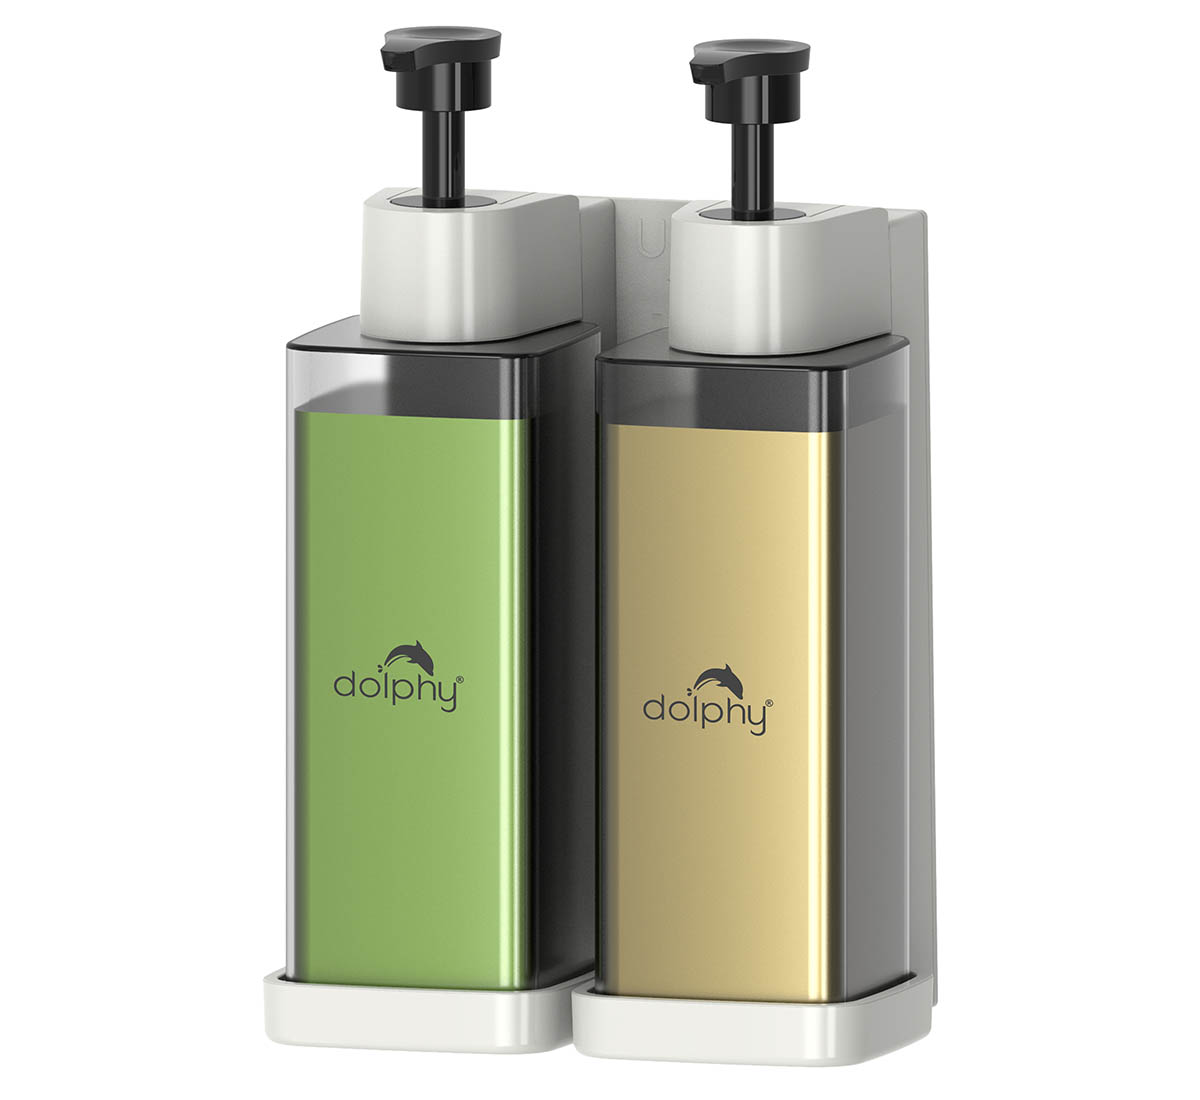 300 Ml Manual Soap Dispenser Set of-2
